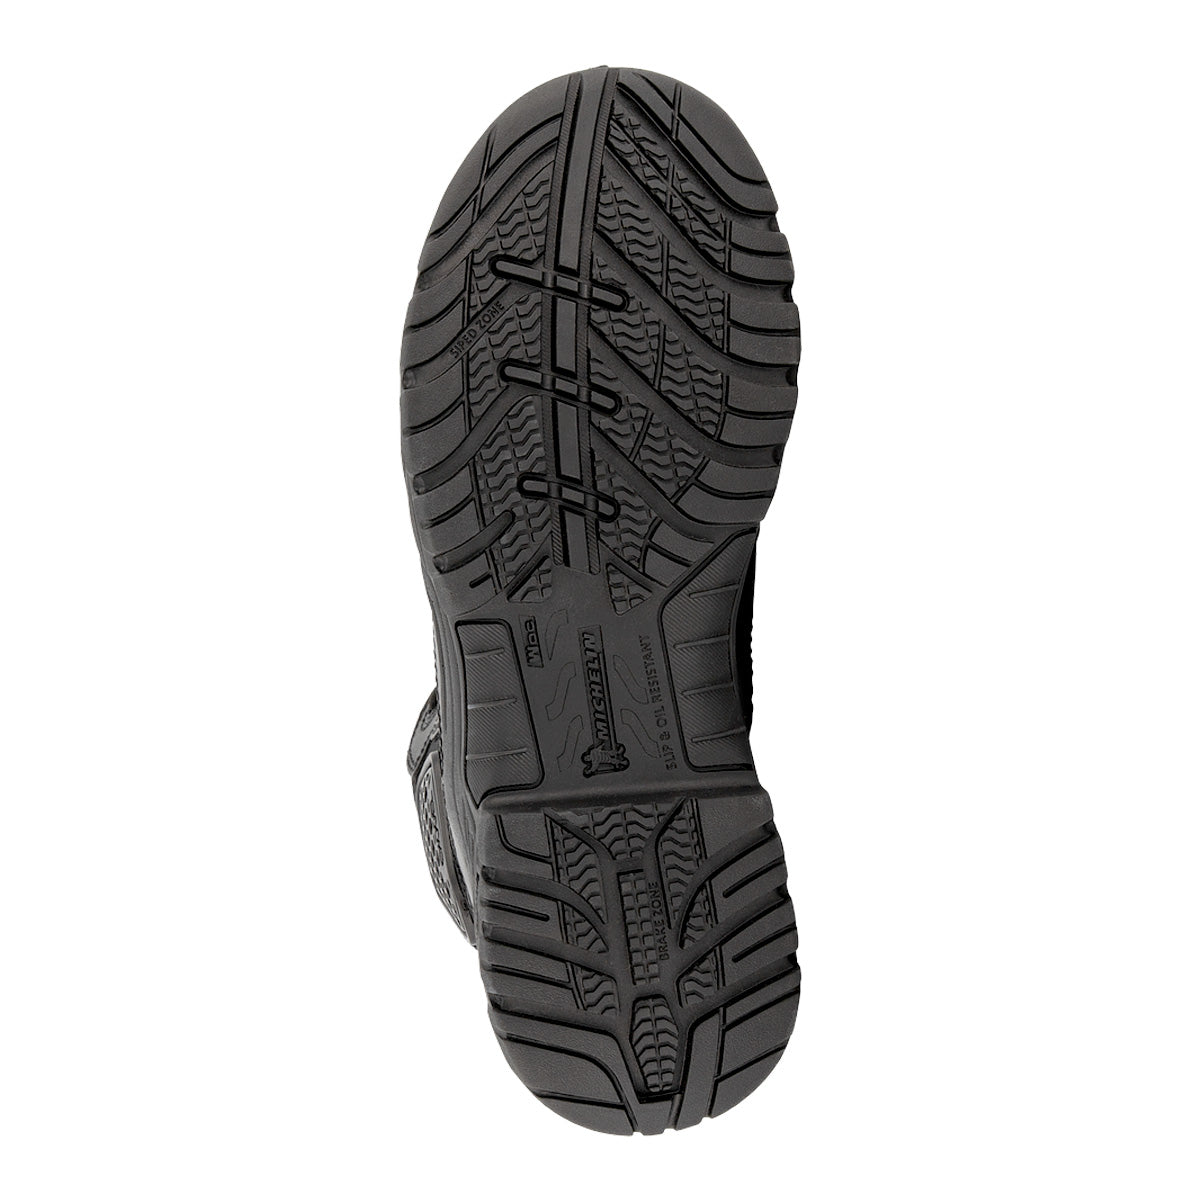 Magnum Strike Force 6.0 Side-Zip Composite Toe Boot Black Footwear Magnum Footwear Tactical Gear Supplier Tactical Distributors Australia